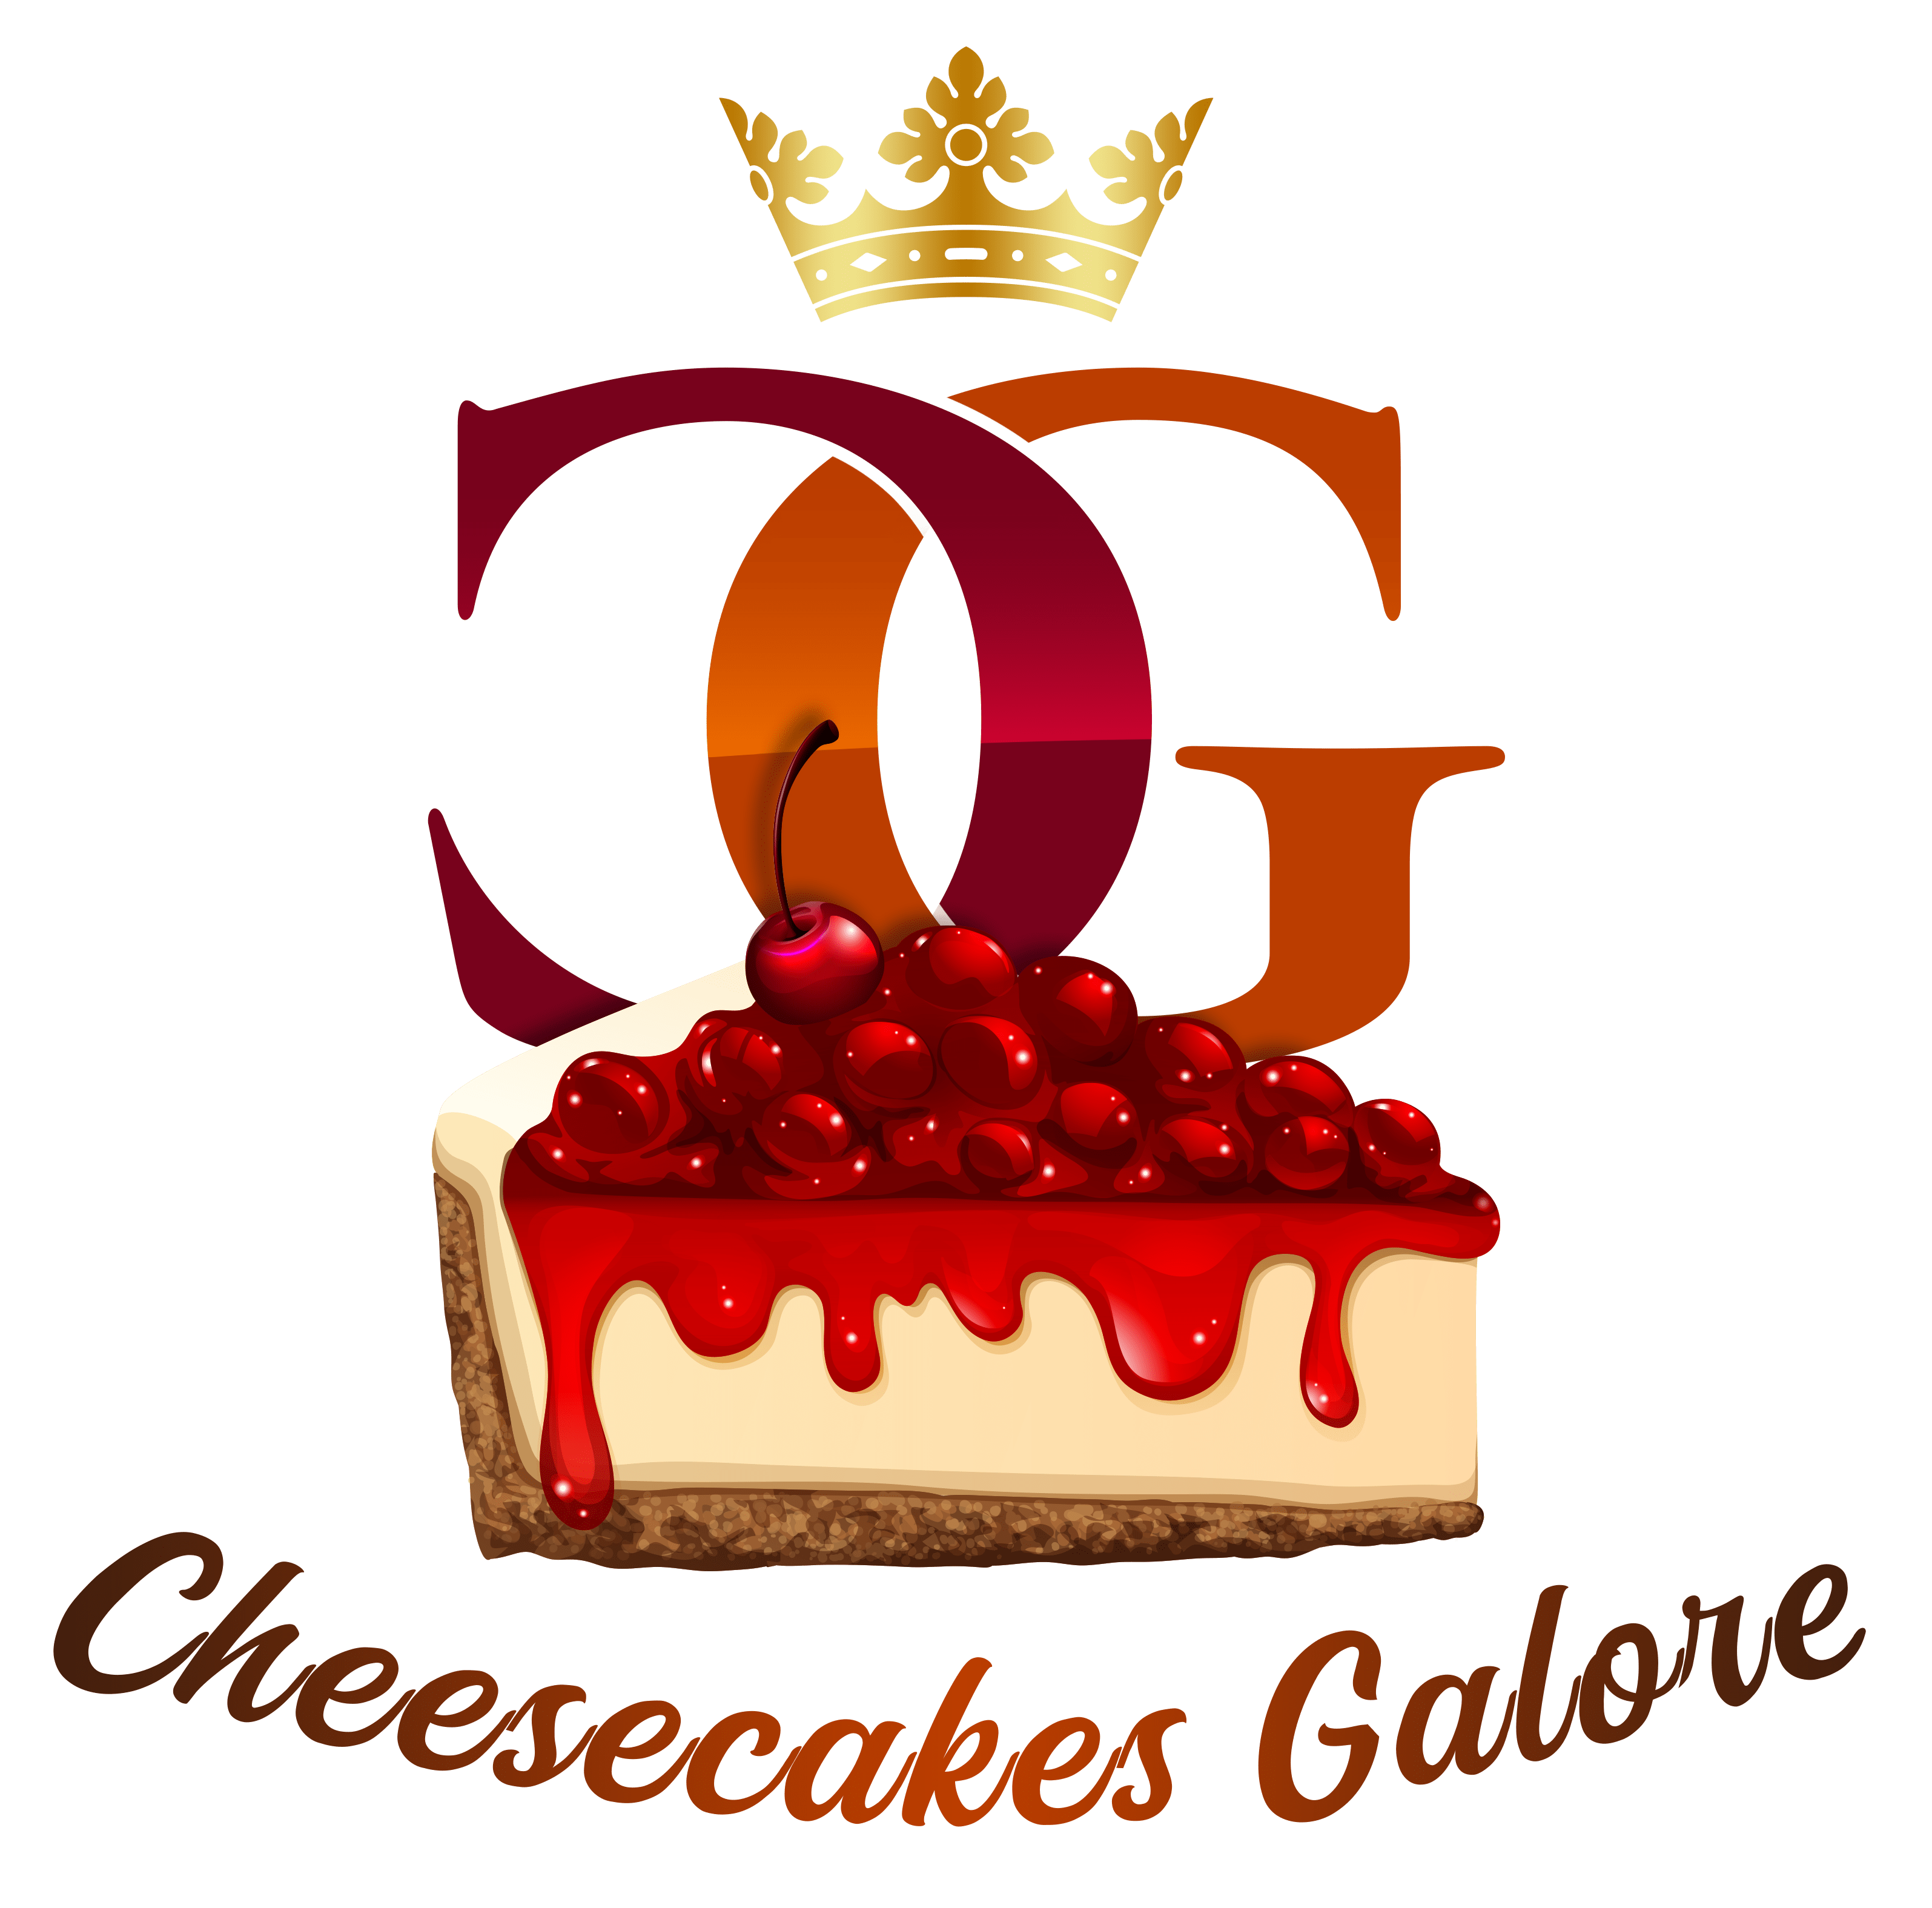 Cheesecakes Galore